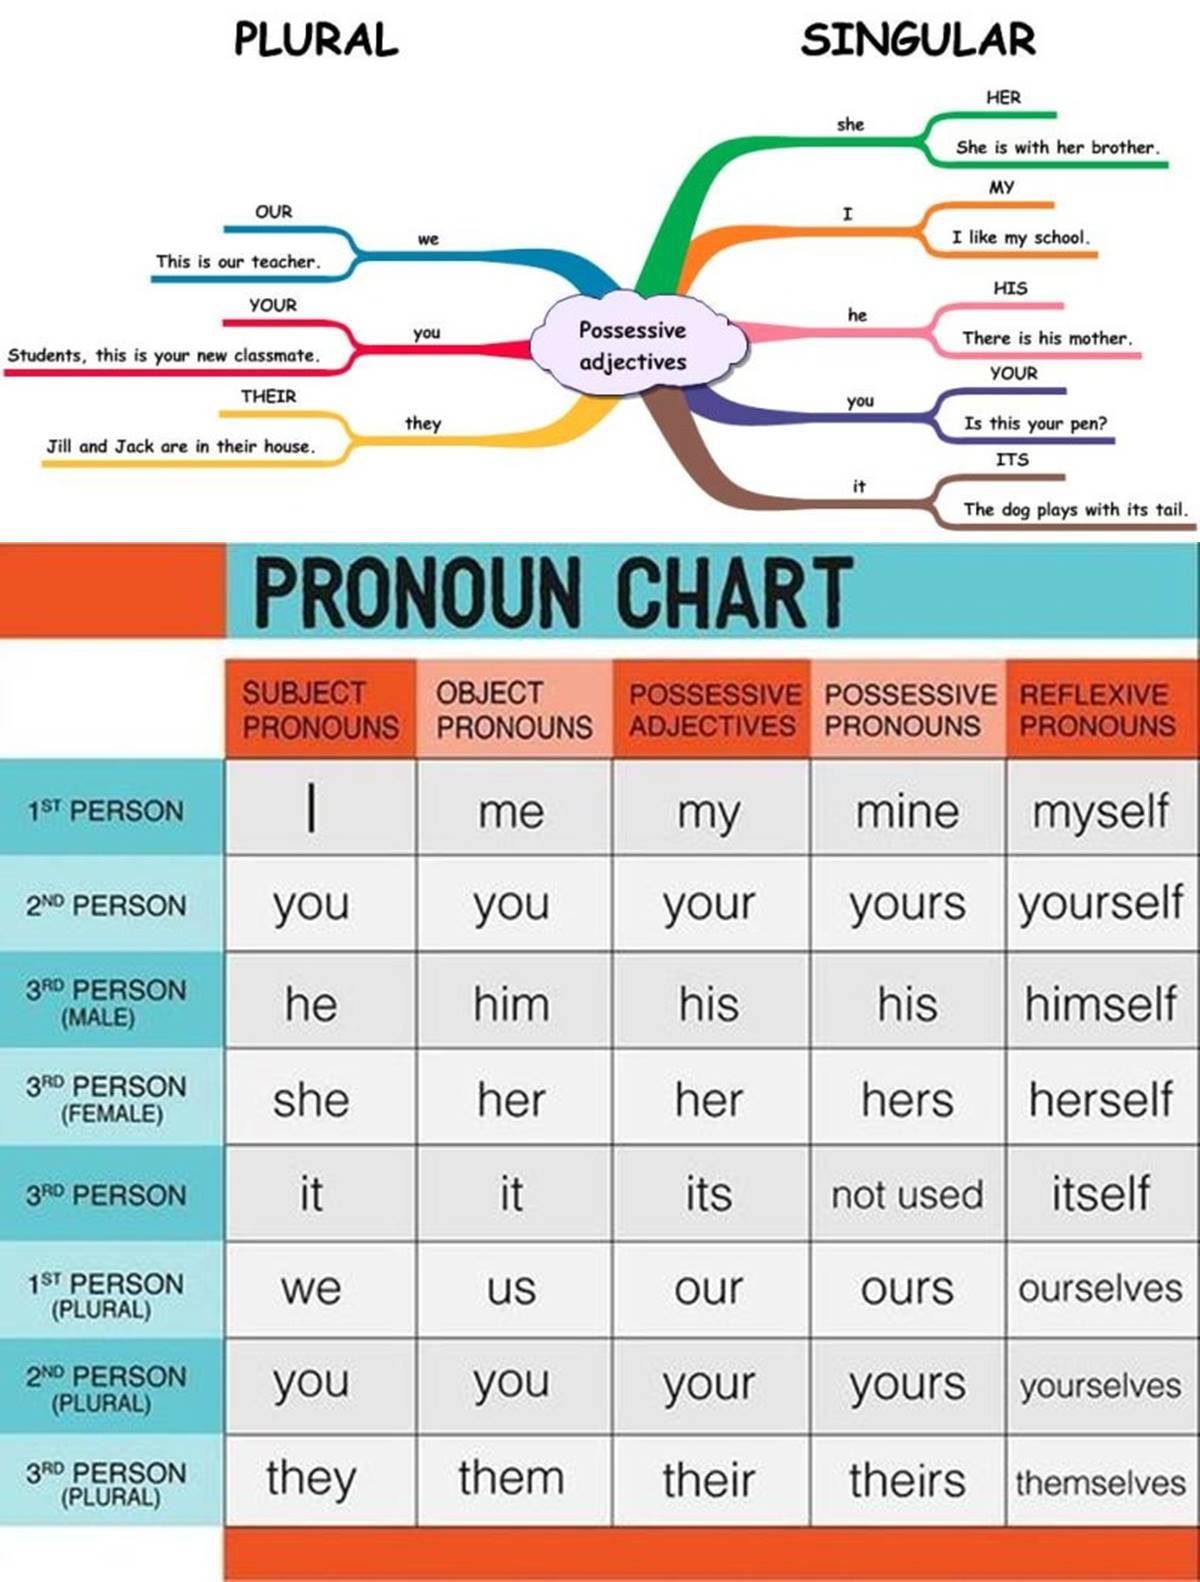 elsecretoestaenlailusion-plural-and-singular-pronoun-chart